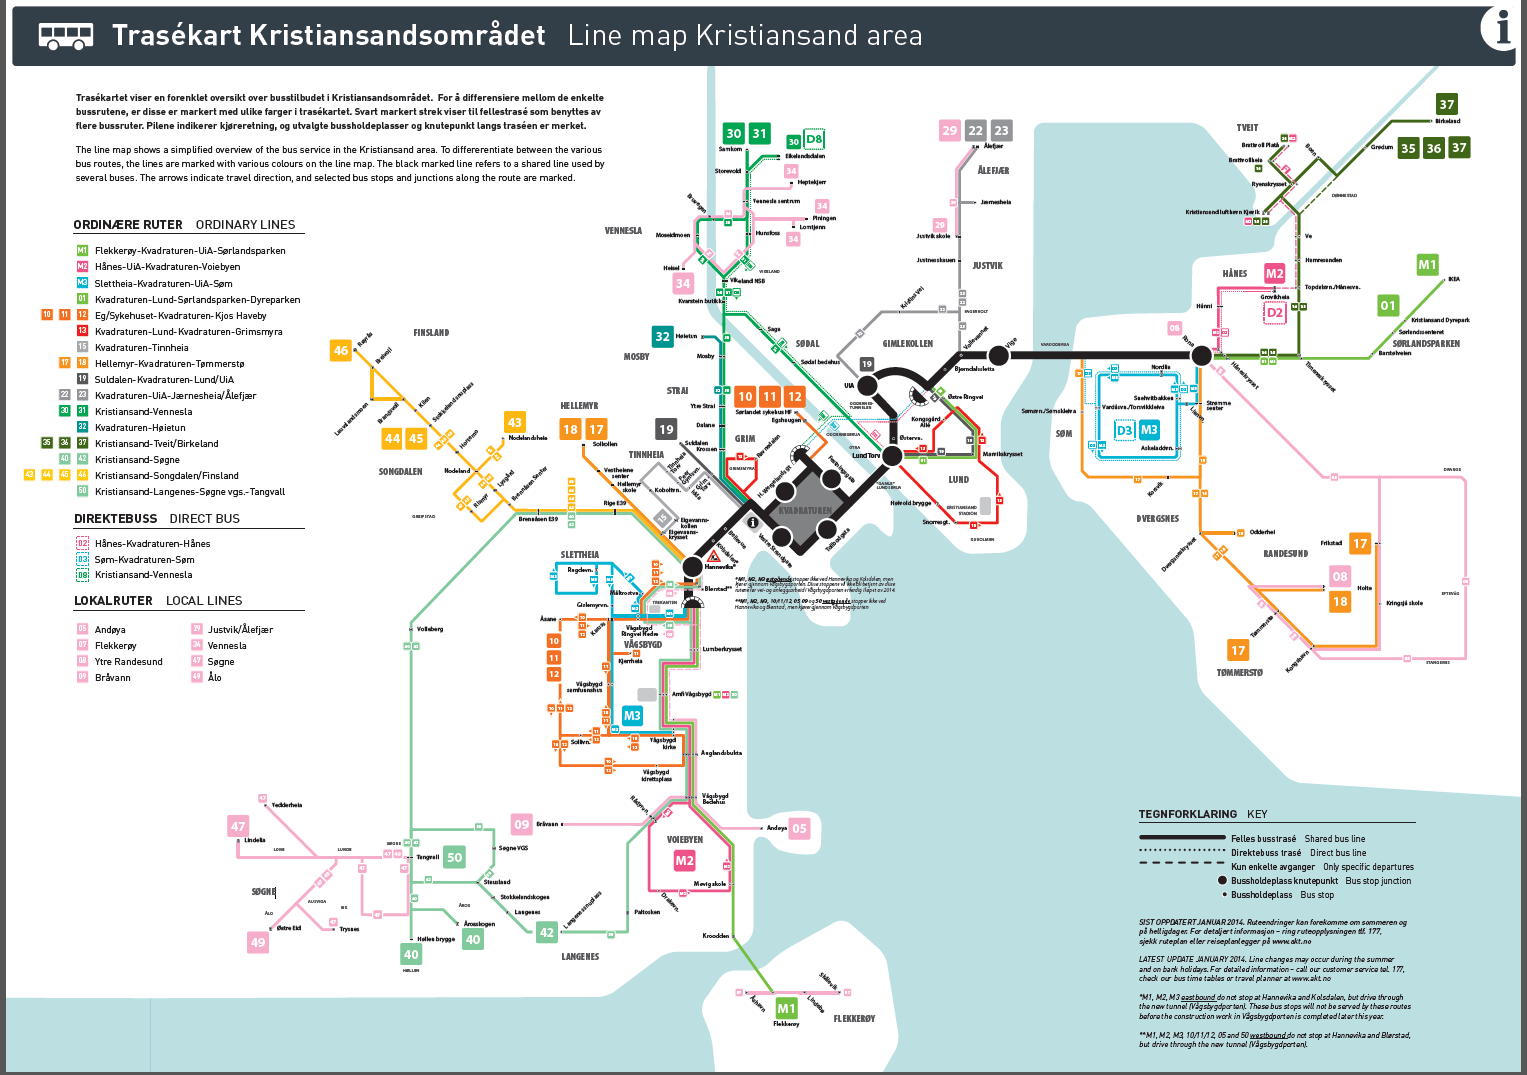 Rutestruktur Kristiansandsområdet: Figur